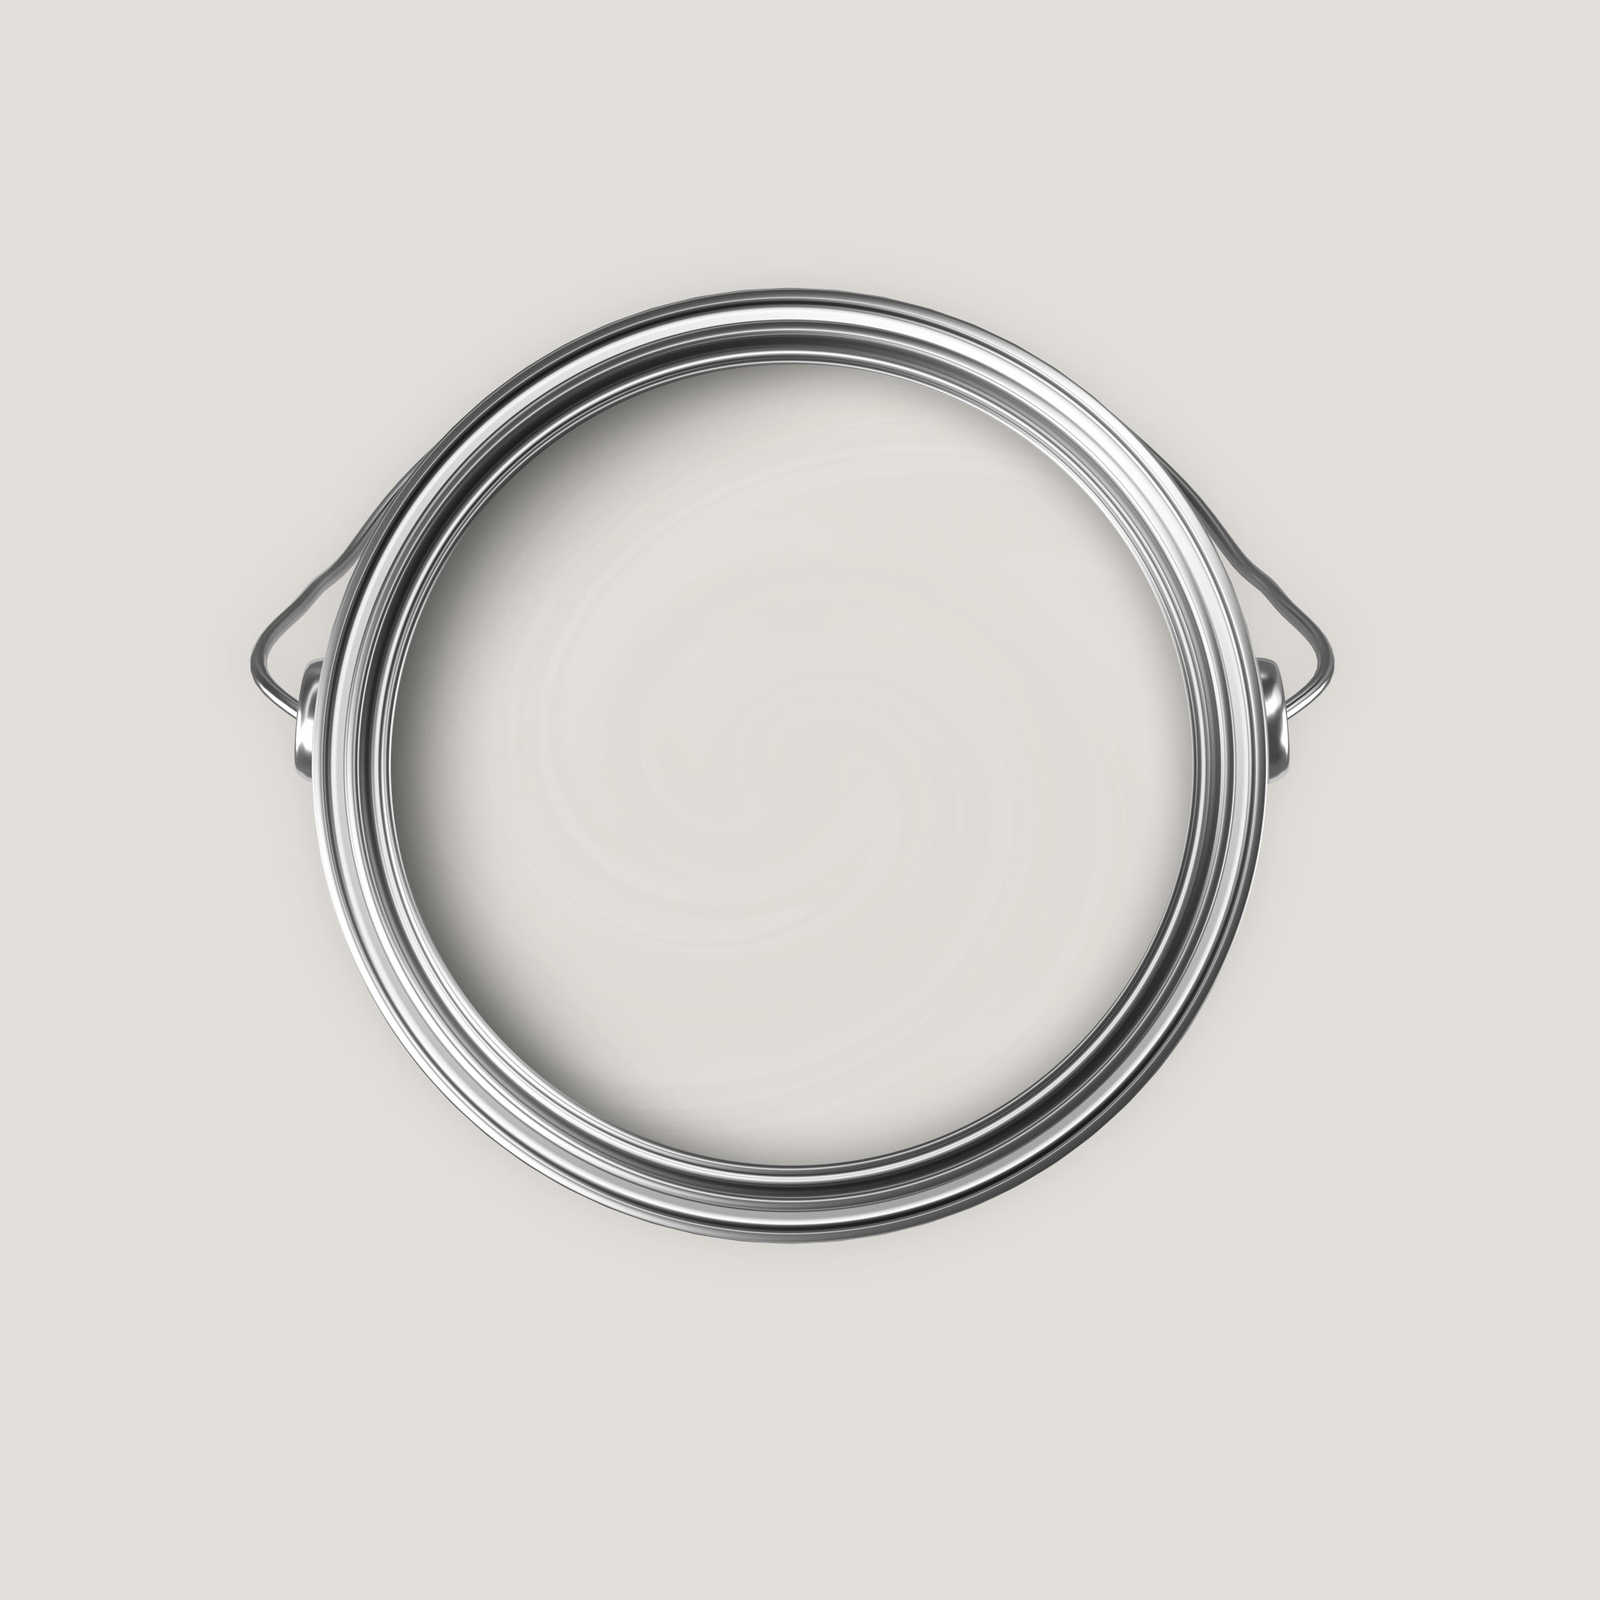             Premium Muurverf tijdloos lichtgrijs »Creamy Grey« NW108 – 5 liter
        